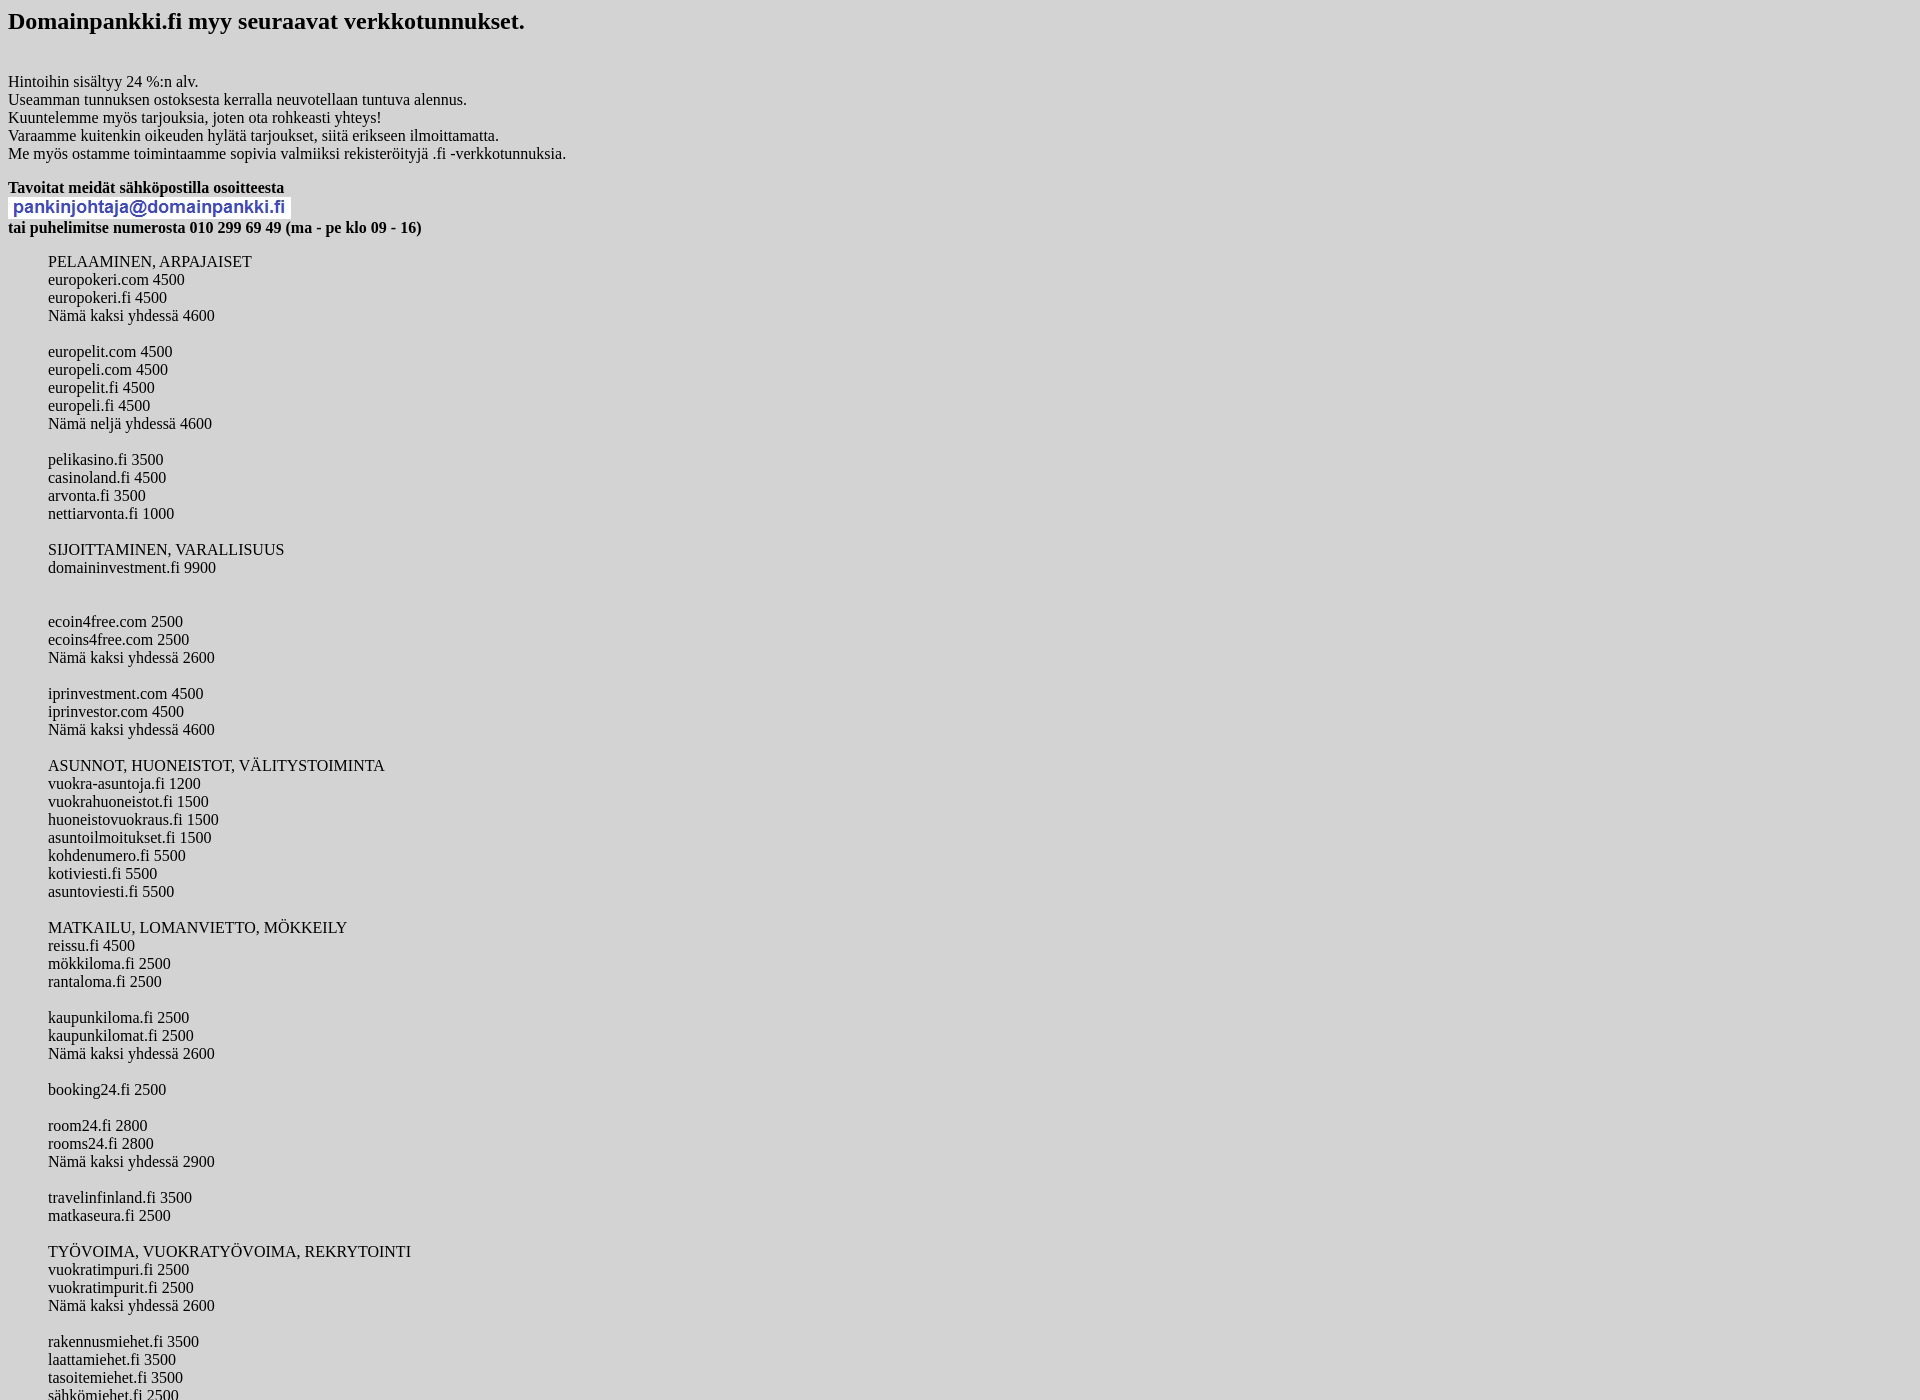 Skärmdump för domainpankki.fi